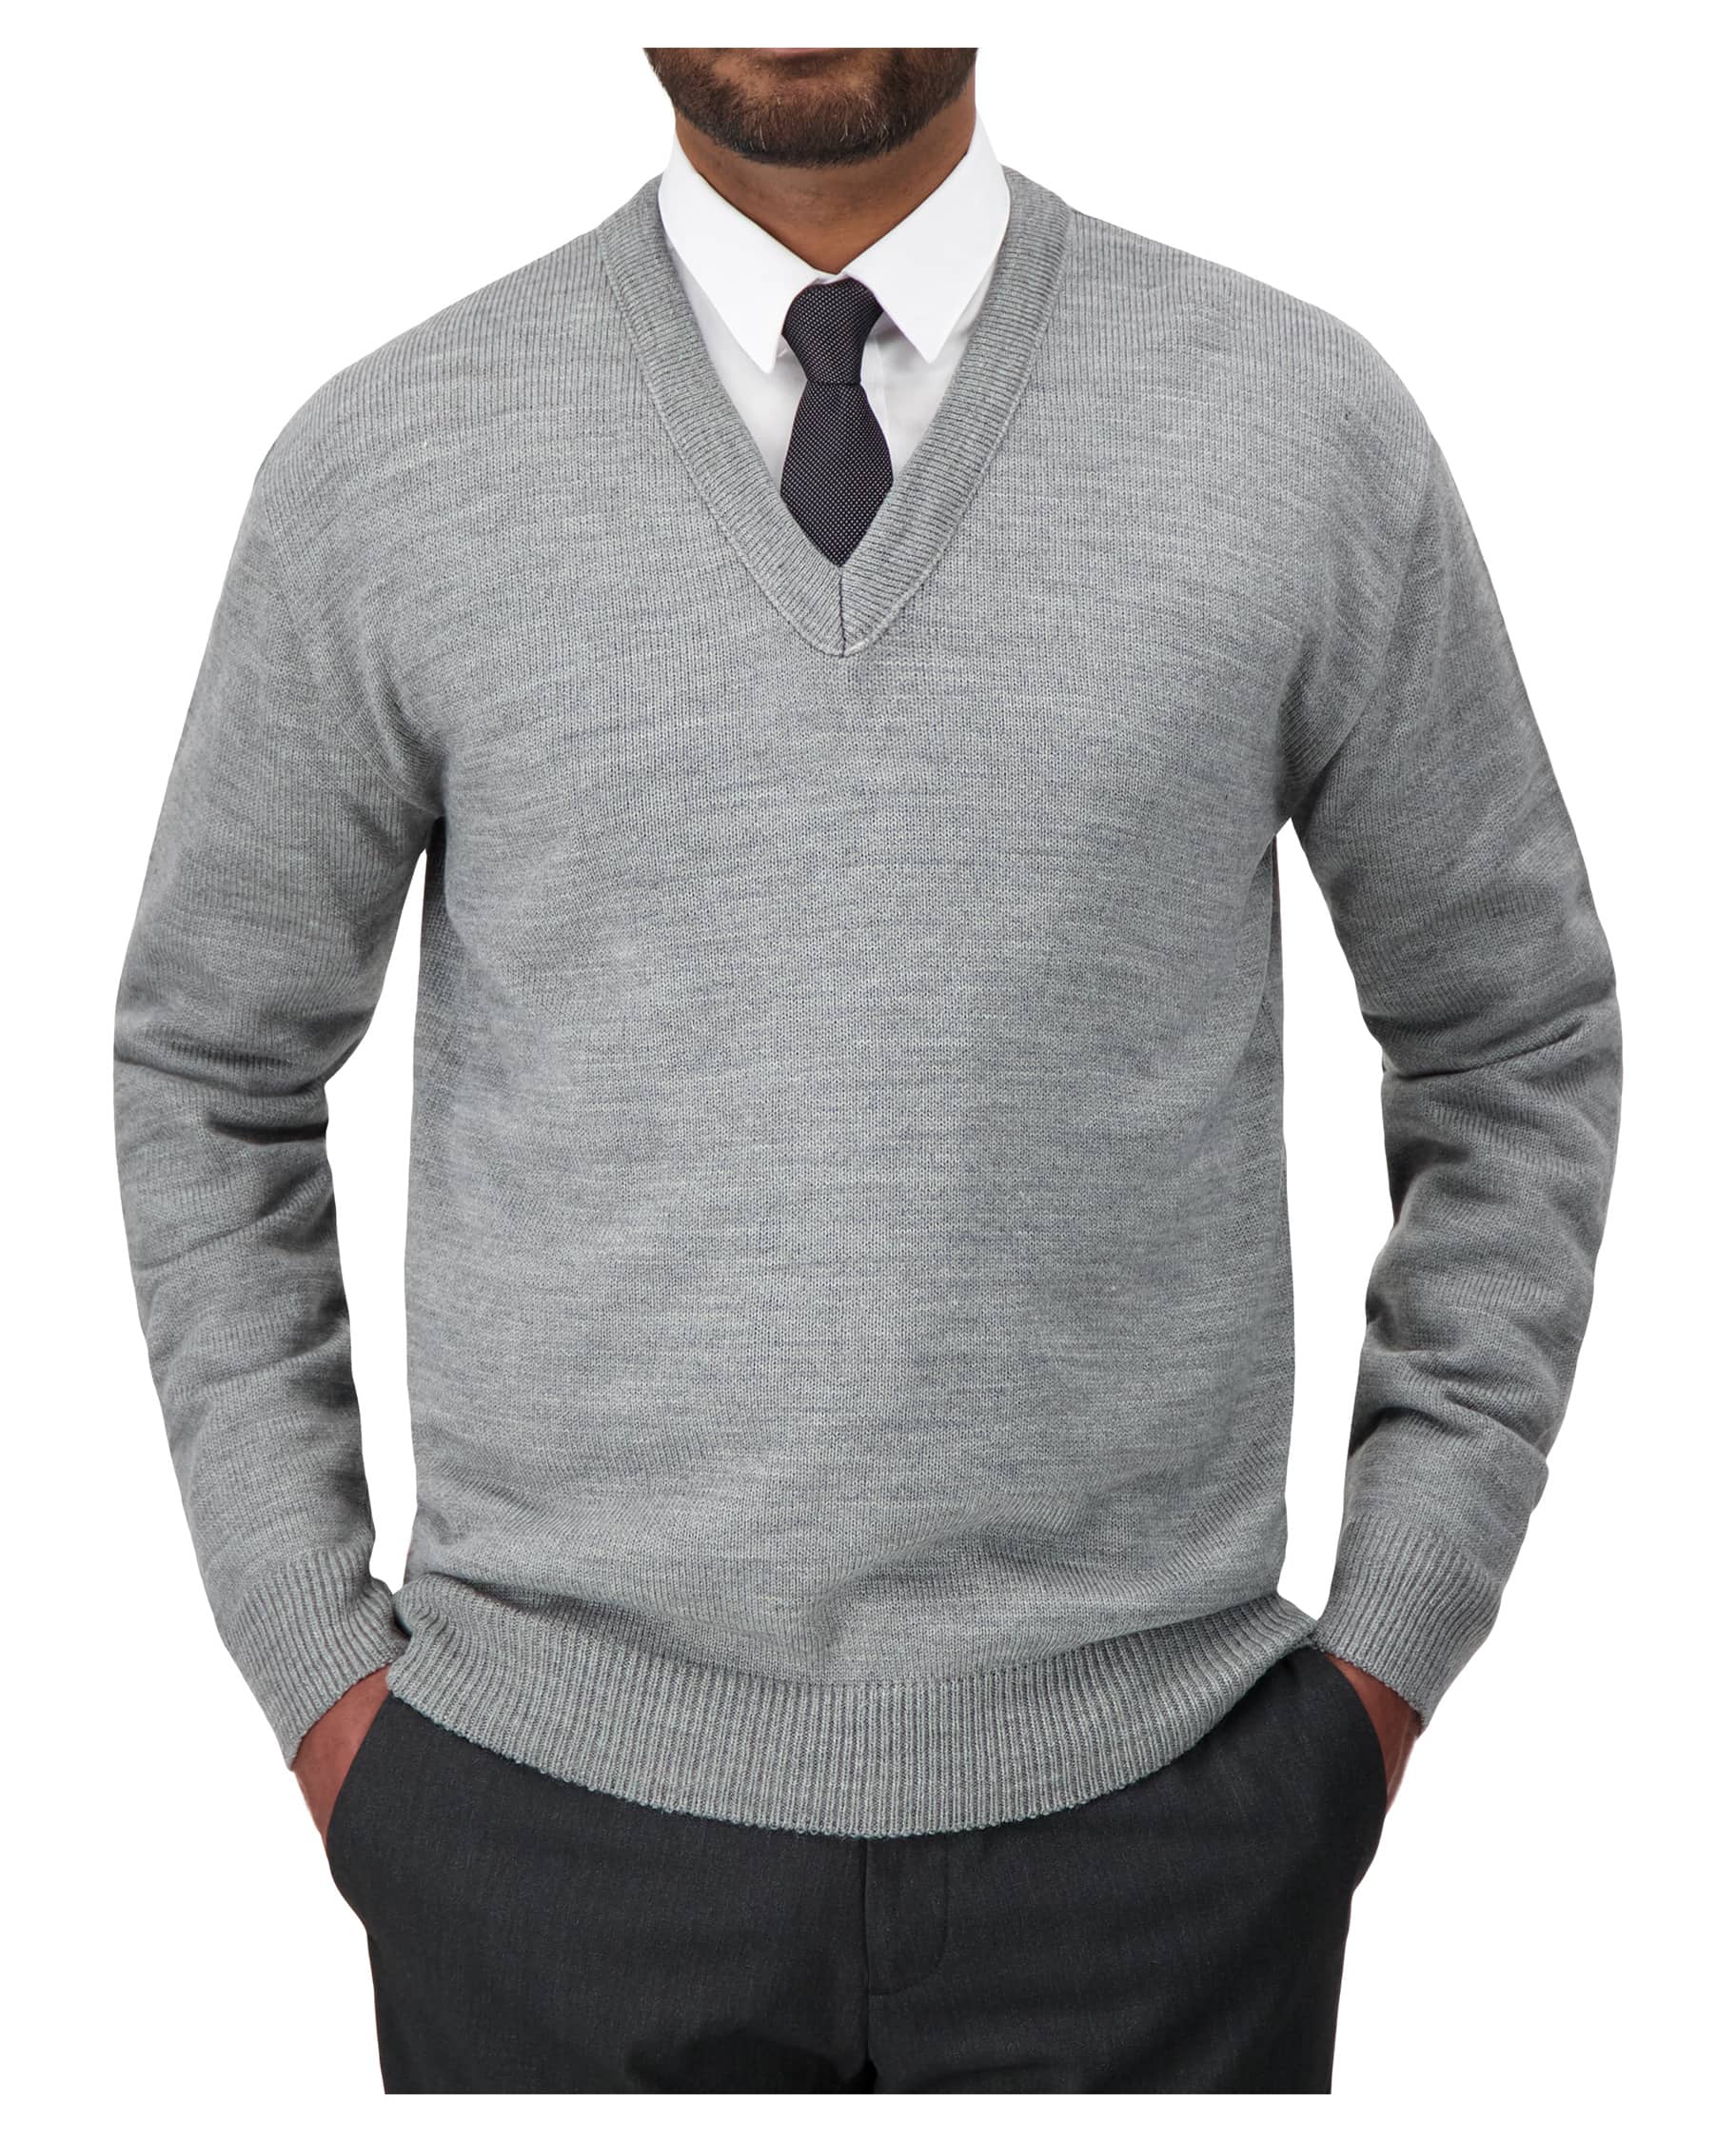 grey v-neck uniform sweater